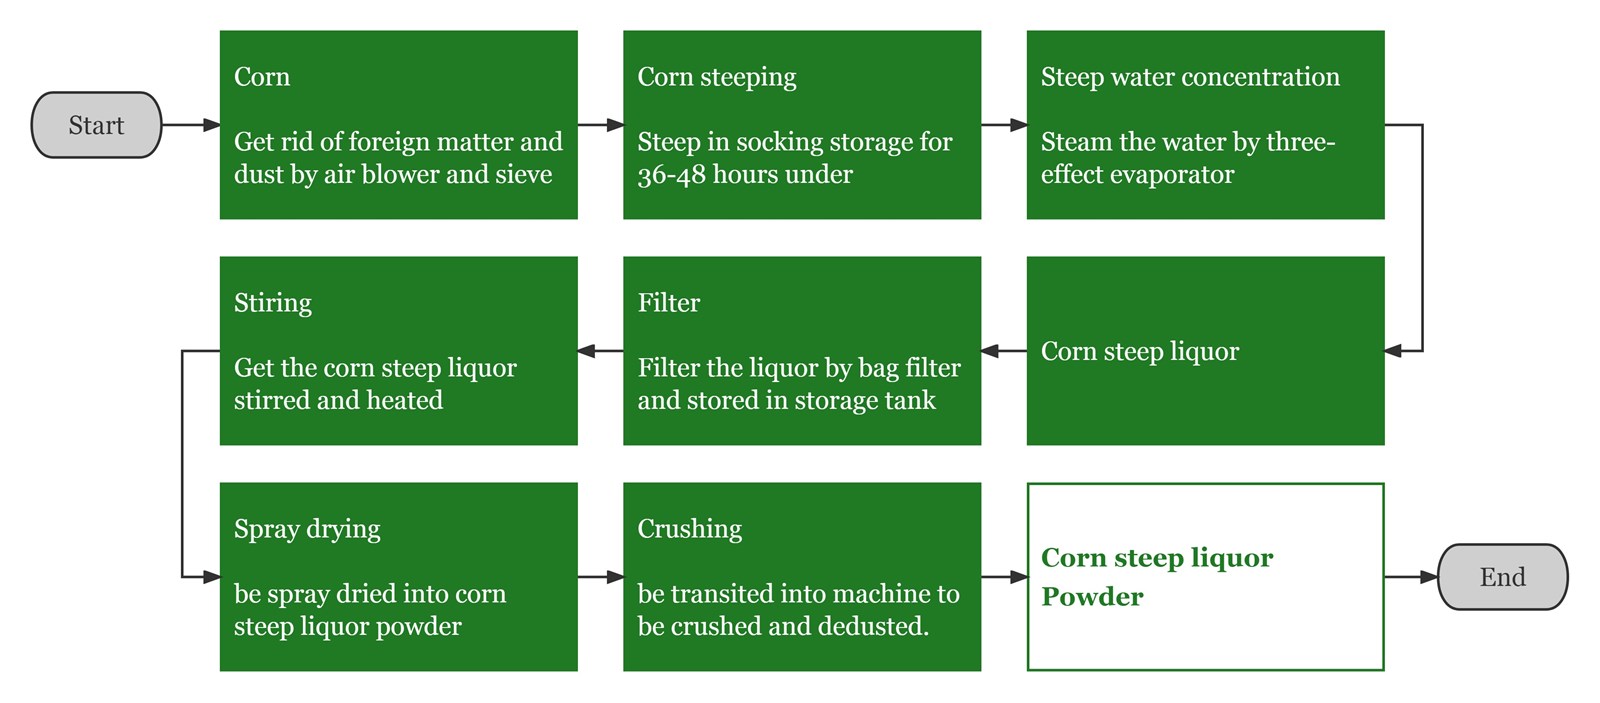 Corn Steep Liquor Powder Organic water soluble material